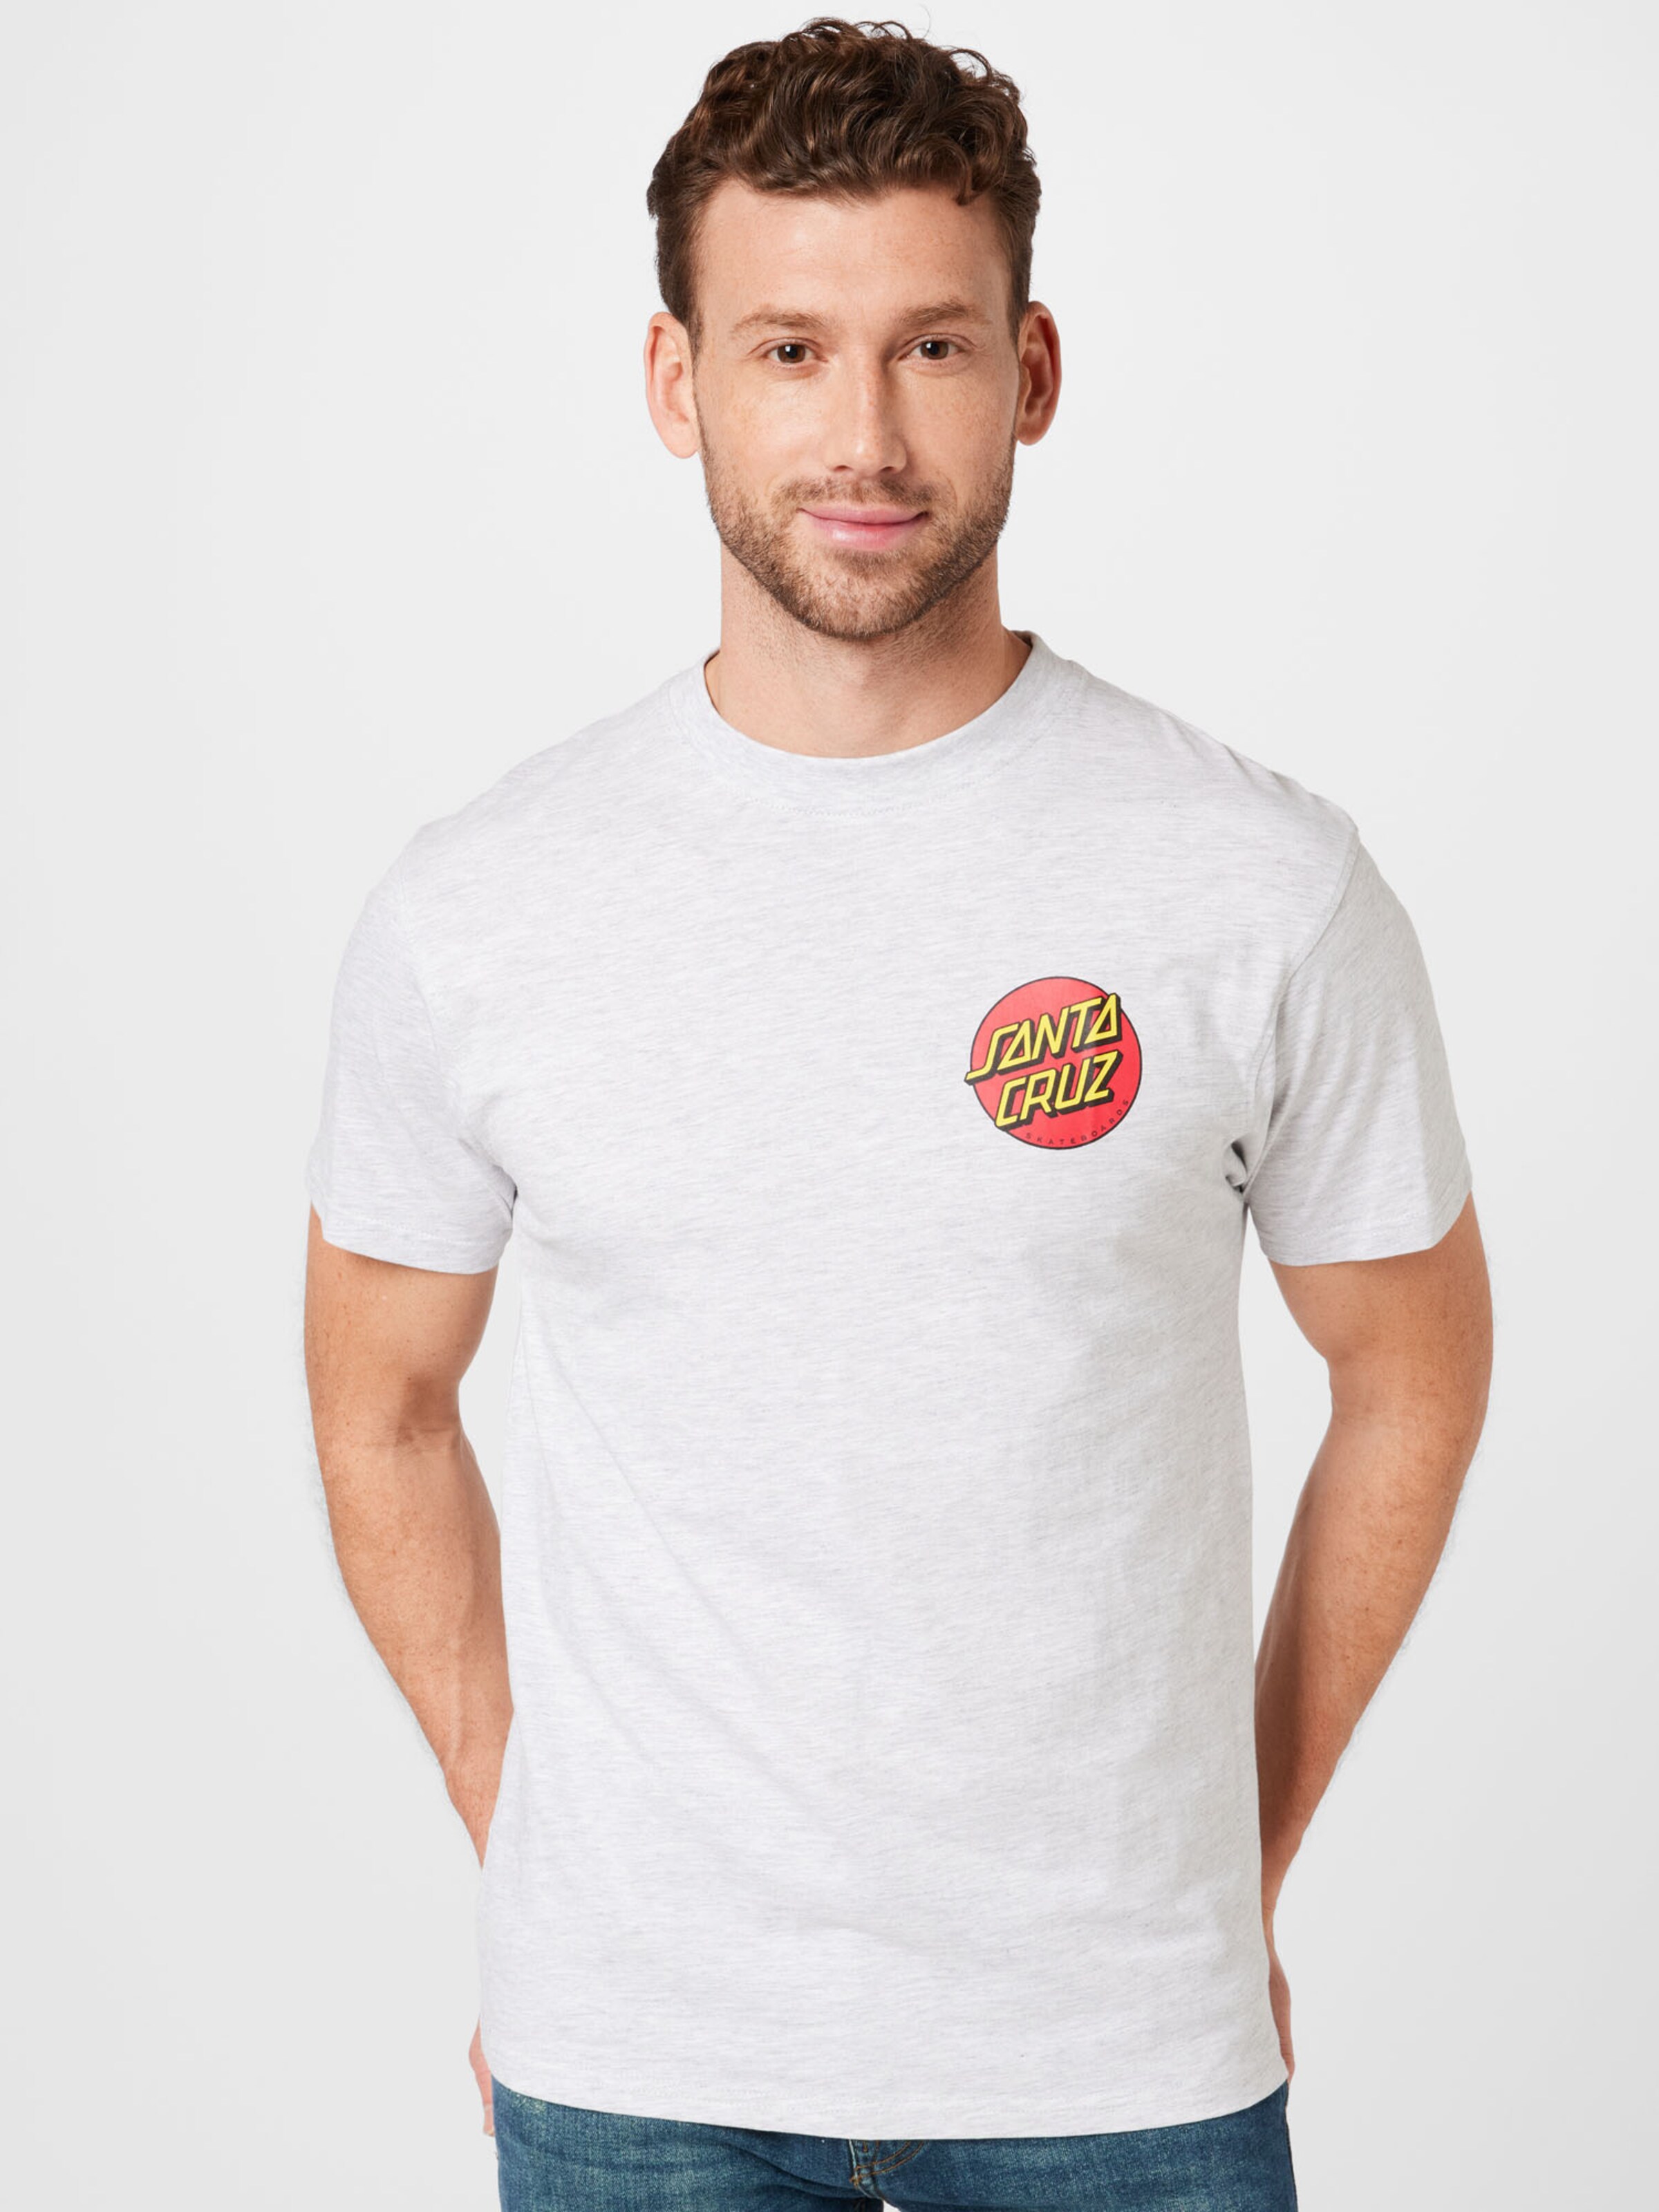 Männer Shirts Santa Cruz T-Shirt in Graumeliert - NJ22185